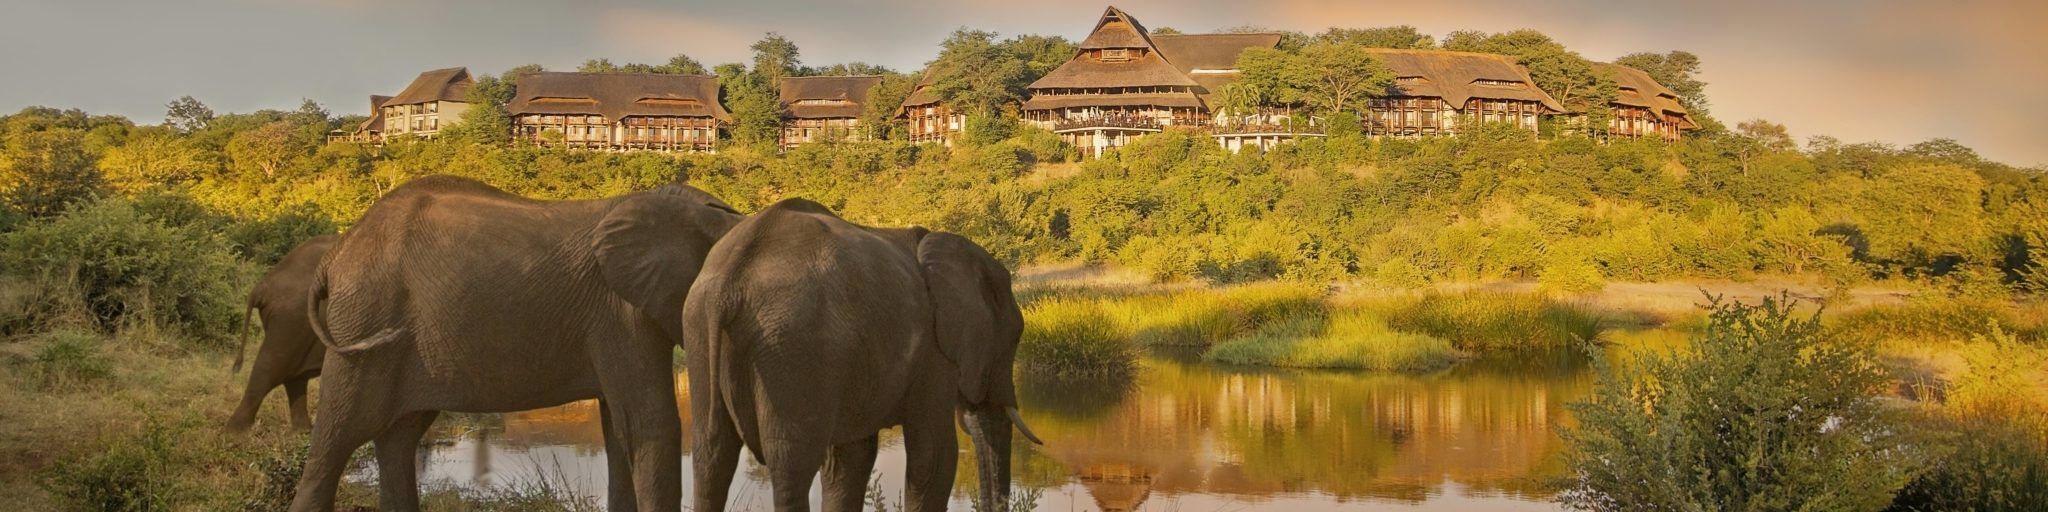 Victoria Falls Safari Lodge elephants in front of lodge banner